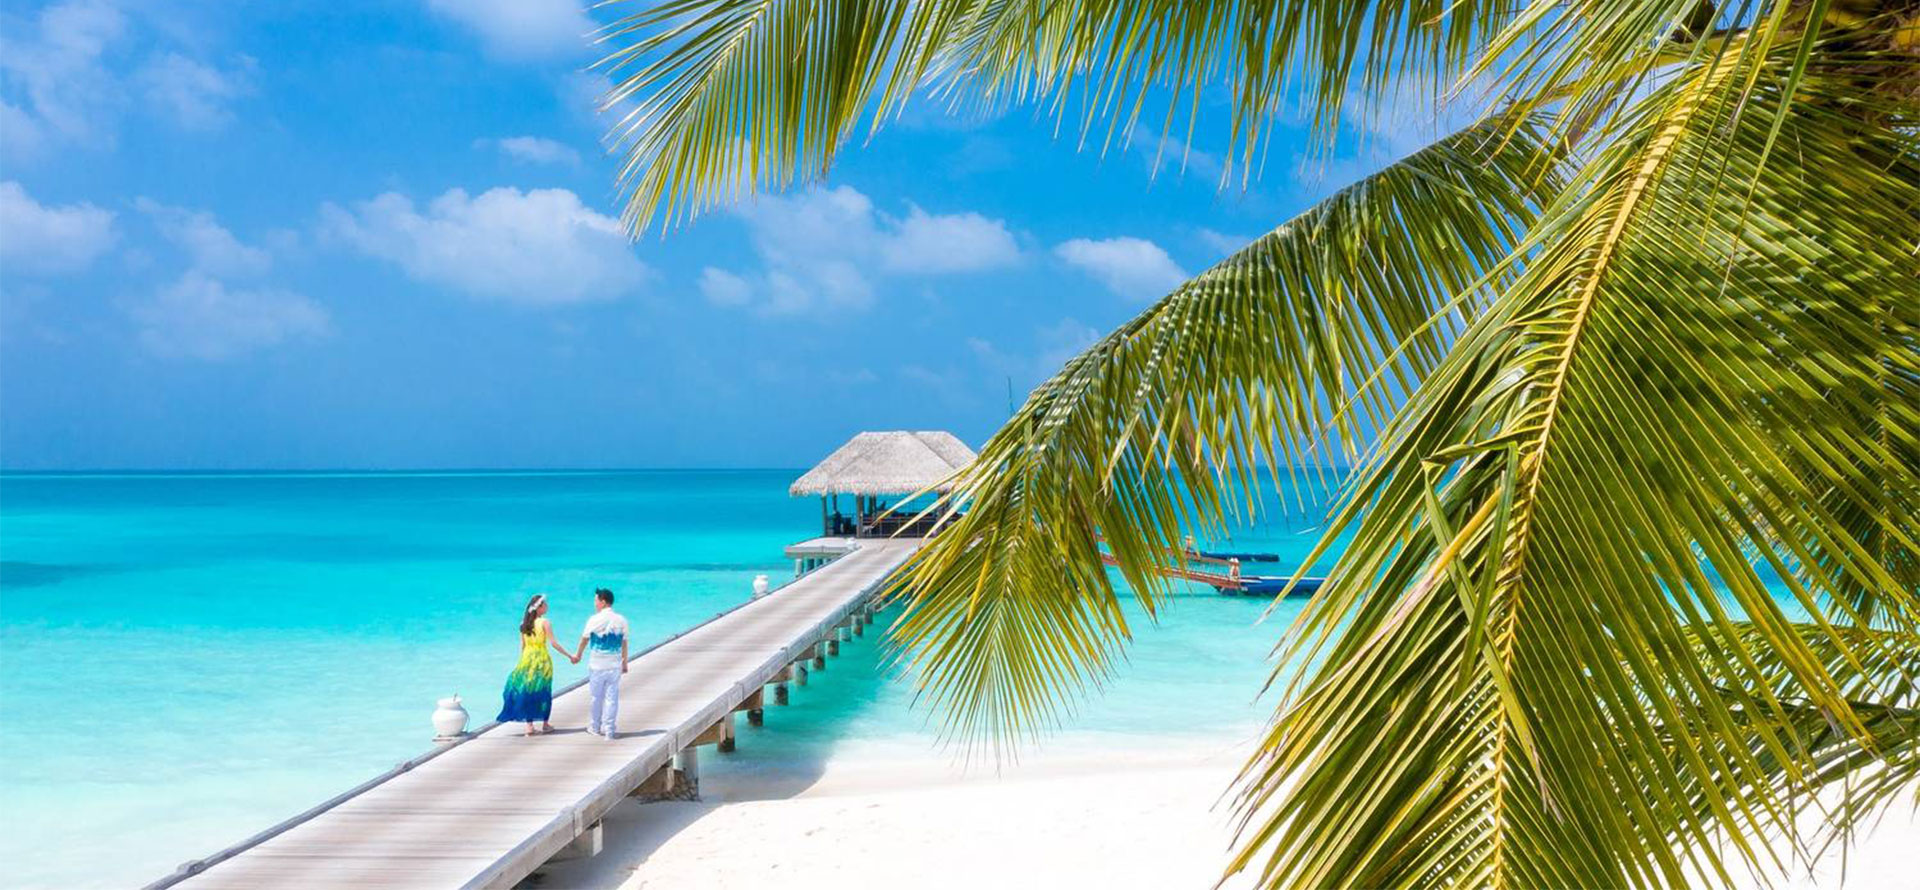 Maldives all inclusive resort and palmtree.